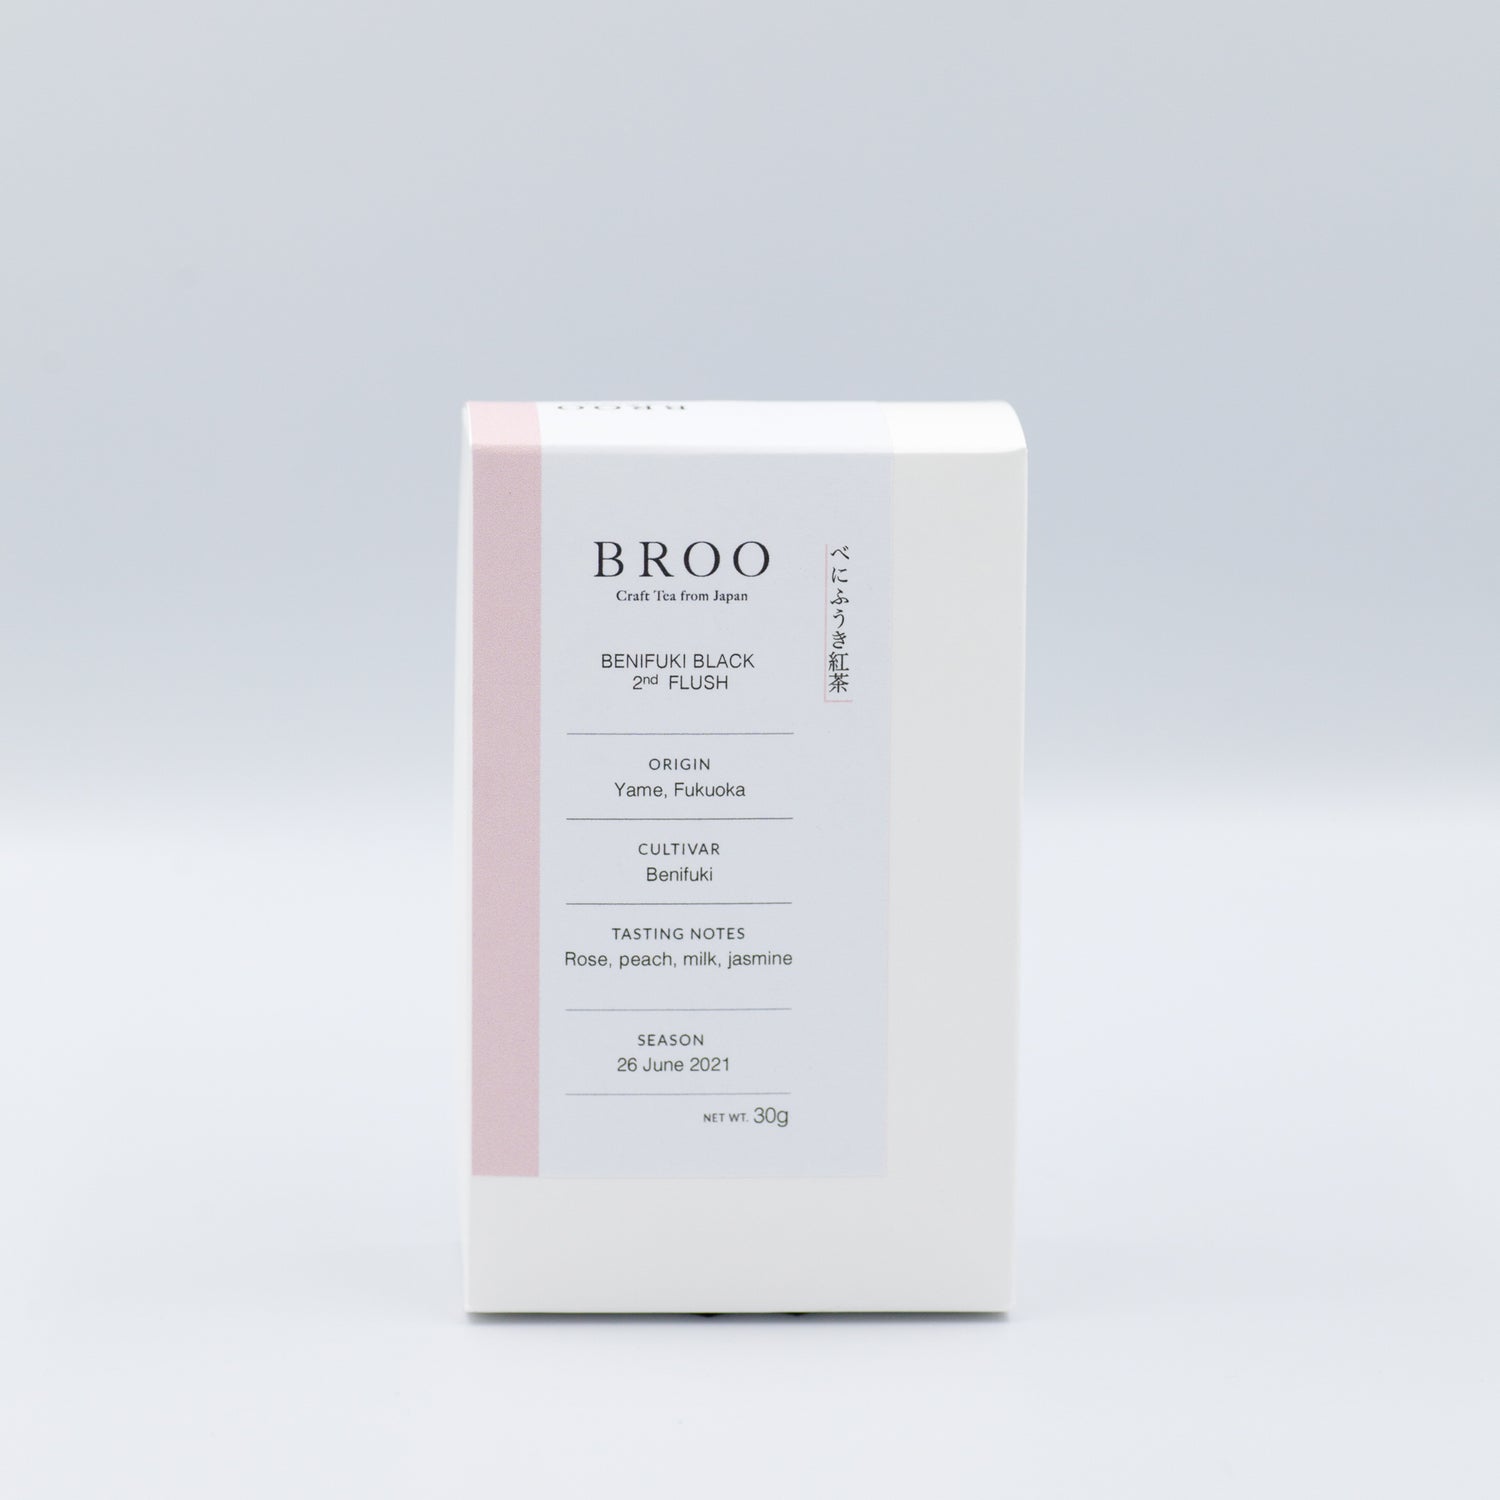 BROO - Craft Tea from Japan - Pesticide-free Benifuki black tea from Yame, Fukuoka, Japan, in sustainable packaging. べにふうき紅茶